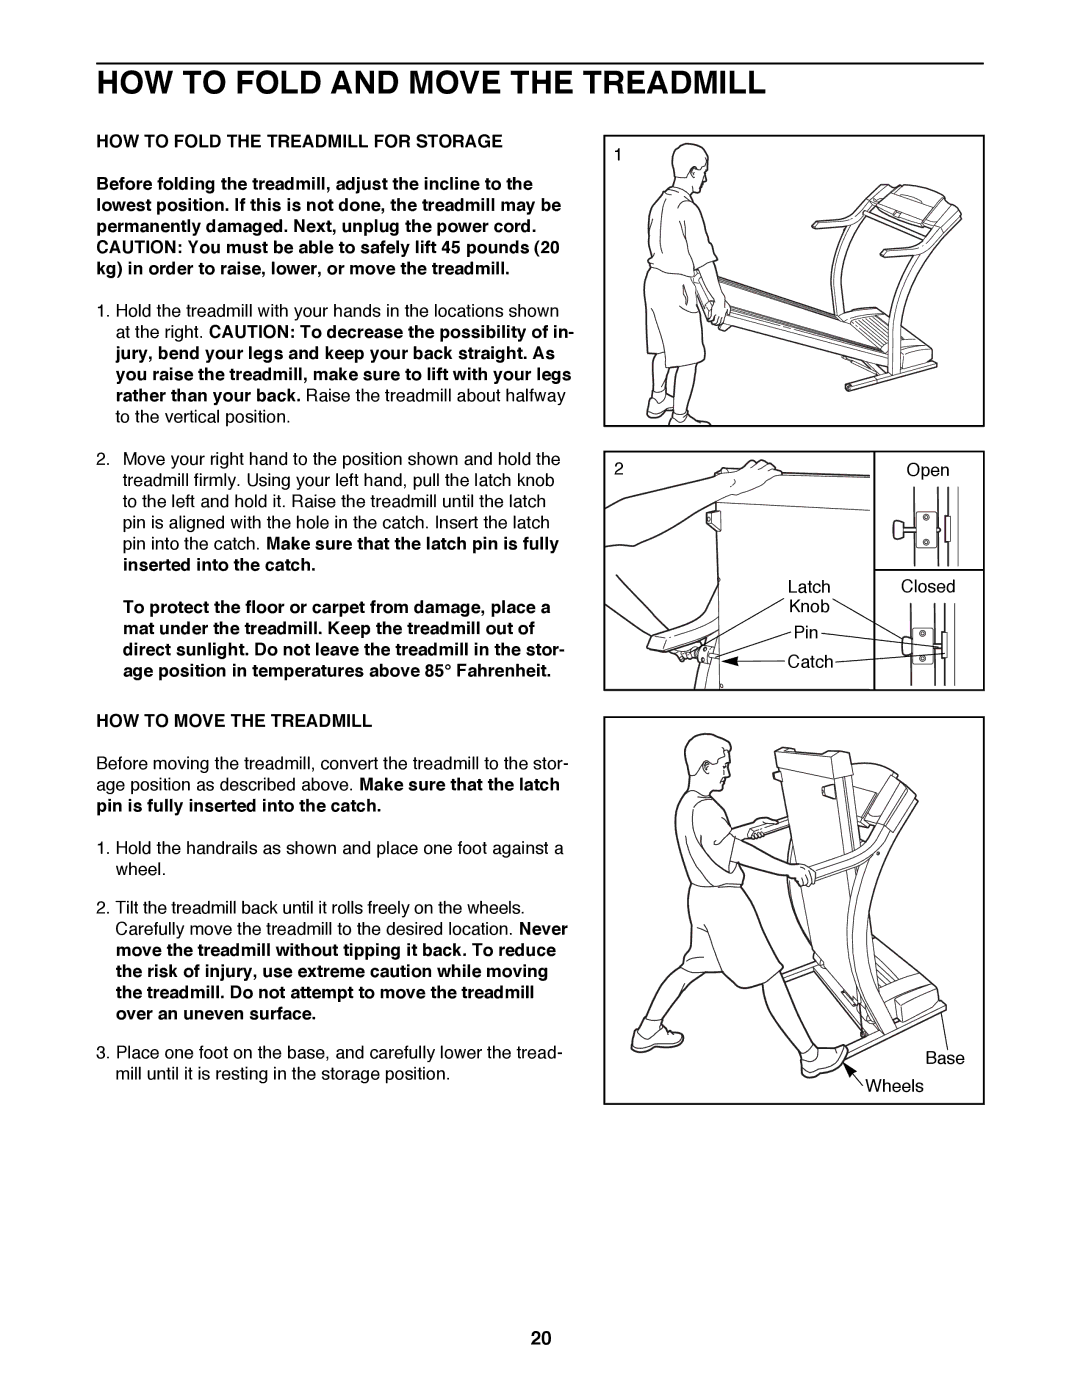 ProForm 831.299481 HOW to Fold and Move the Treadmill, HOW to Fold the Treadmill for Storage, HOW to Move the Treadmill 